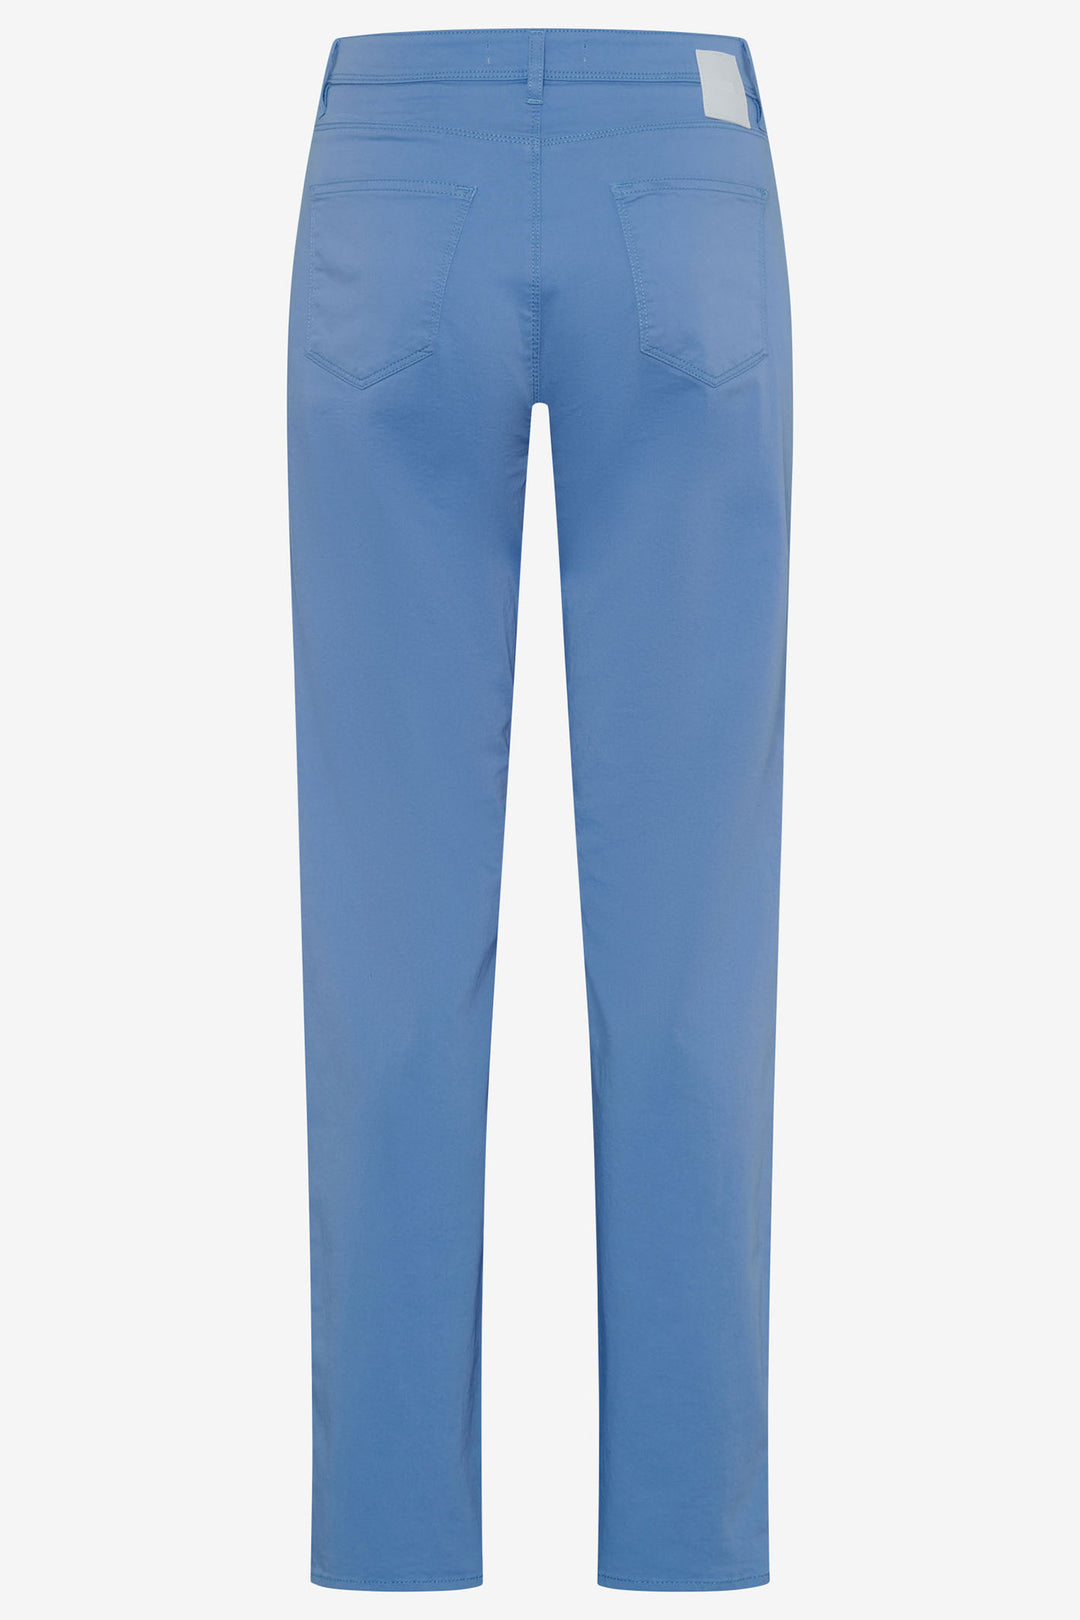 Brax Carola 71-1458 09859520 28 Santorin Blue Five Pocket Jeans